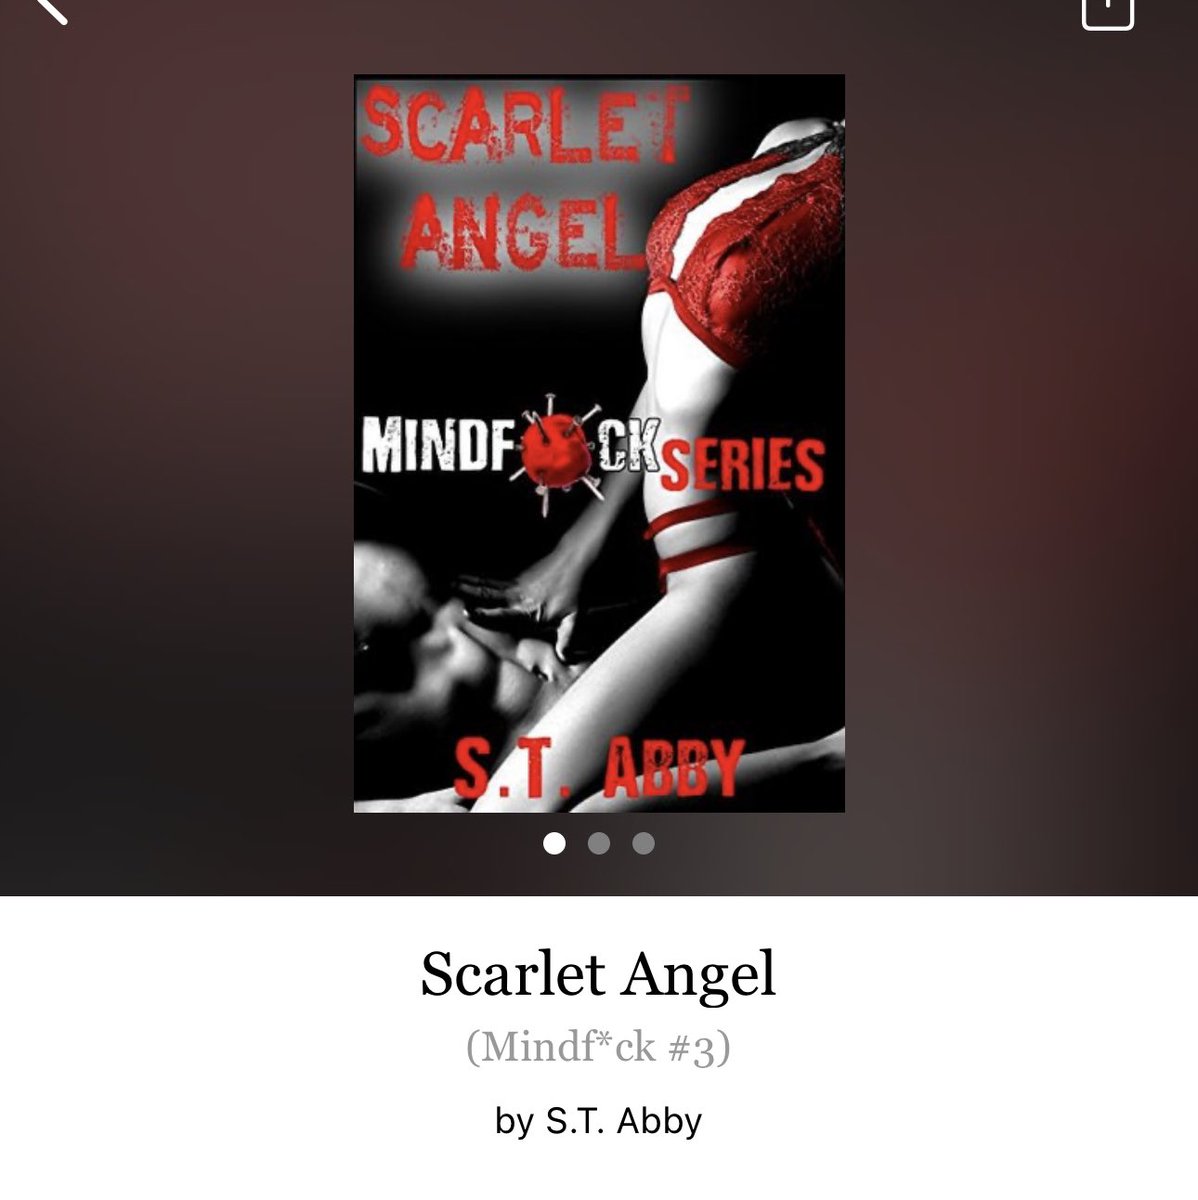 Scarlet Angel by ST Abby 

#ScarletAngel by #STAbby #5033 #15chapters #139pages #576of400 #4hourAudiobook #audiobook #38for10 #series #MindFu*kSeries #June2023 #clearingoffreadingshelves #whatsnext #readiitquick